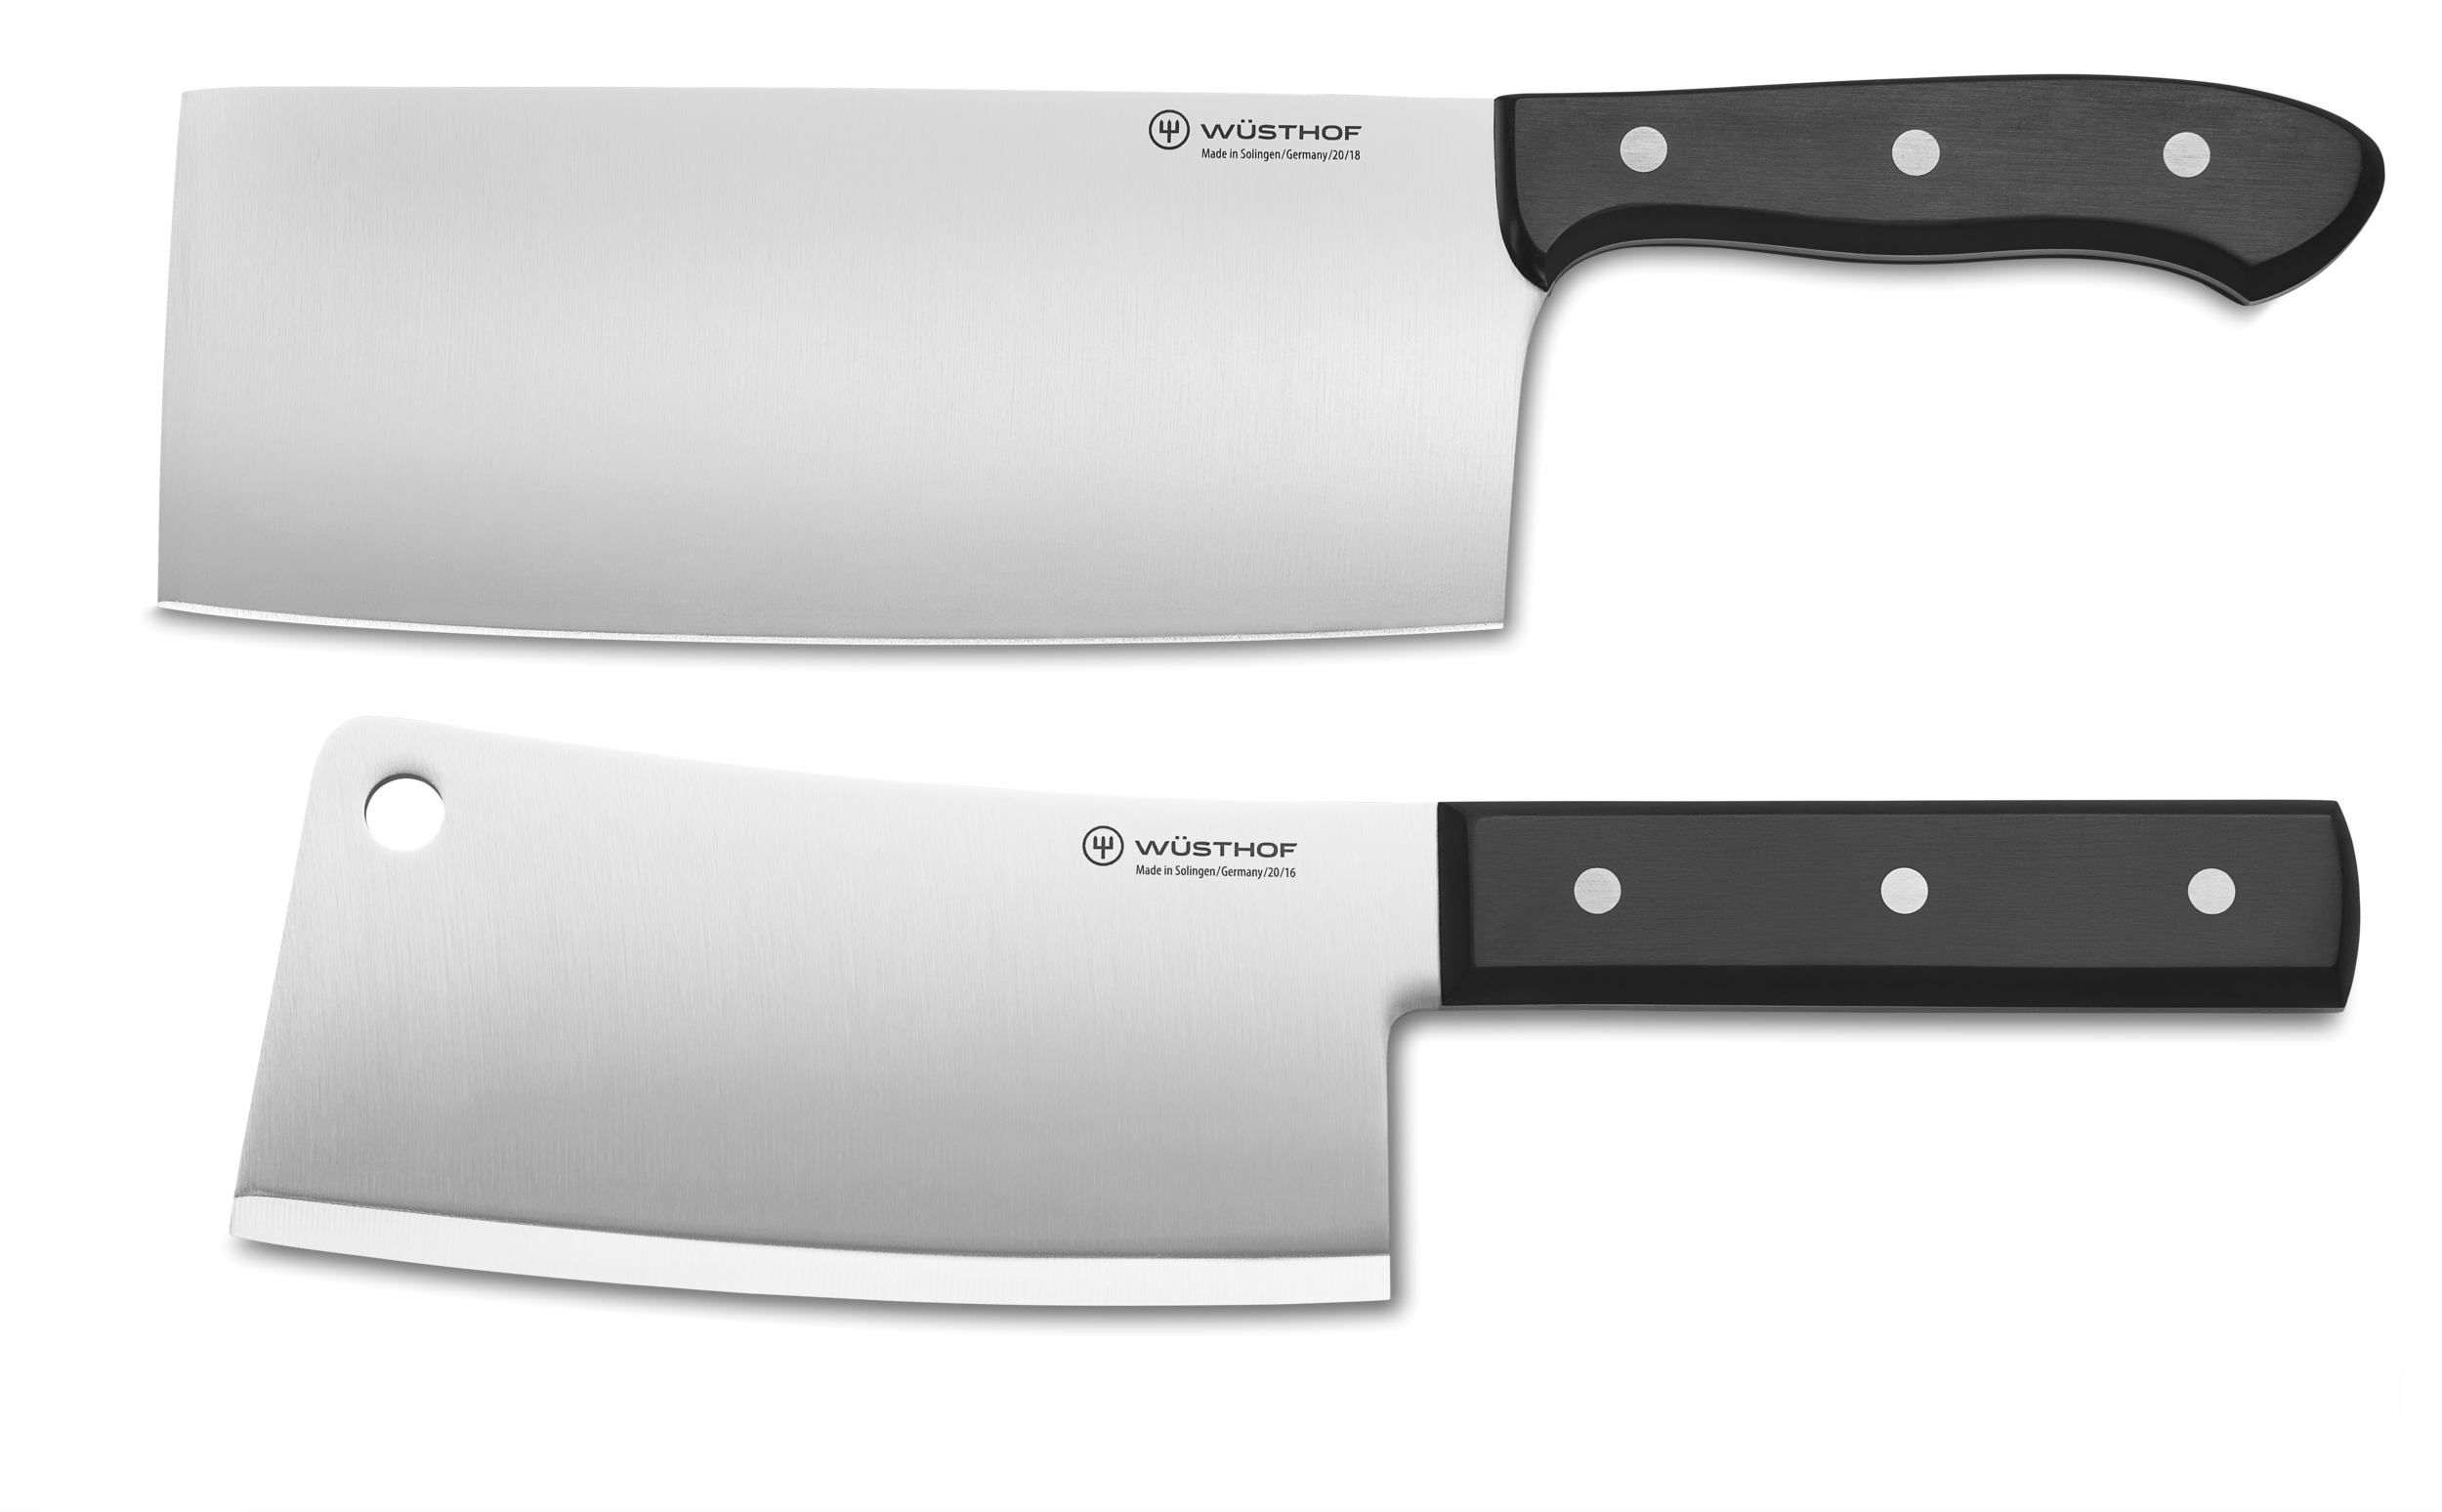 Kitchen 3 Asian Knife Set Black Steel Stainless Steel Slicing, Bone Chopping